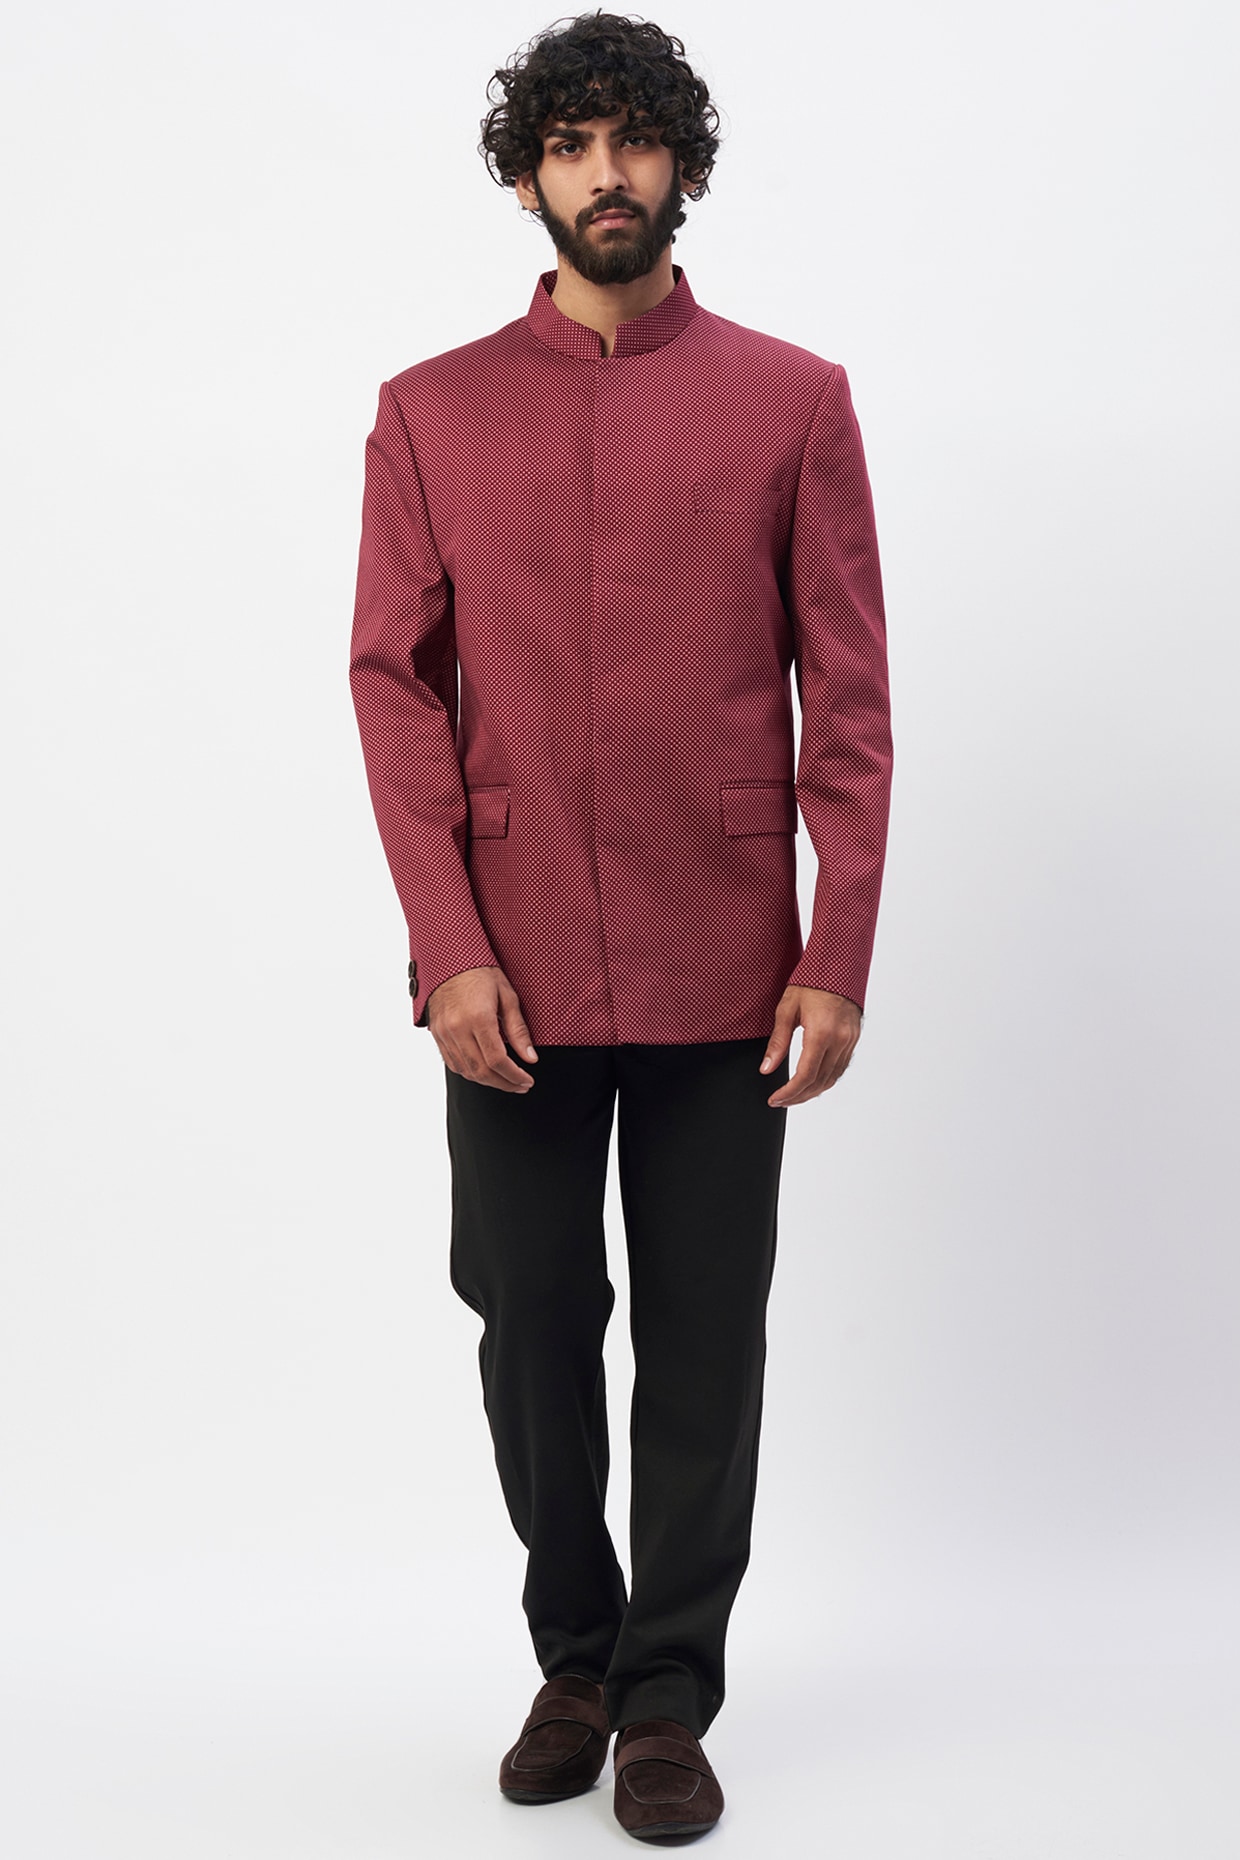 Jodhpuri suit | Maroon outfit, Western suits, Formal pant